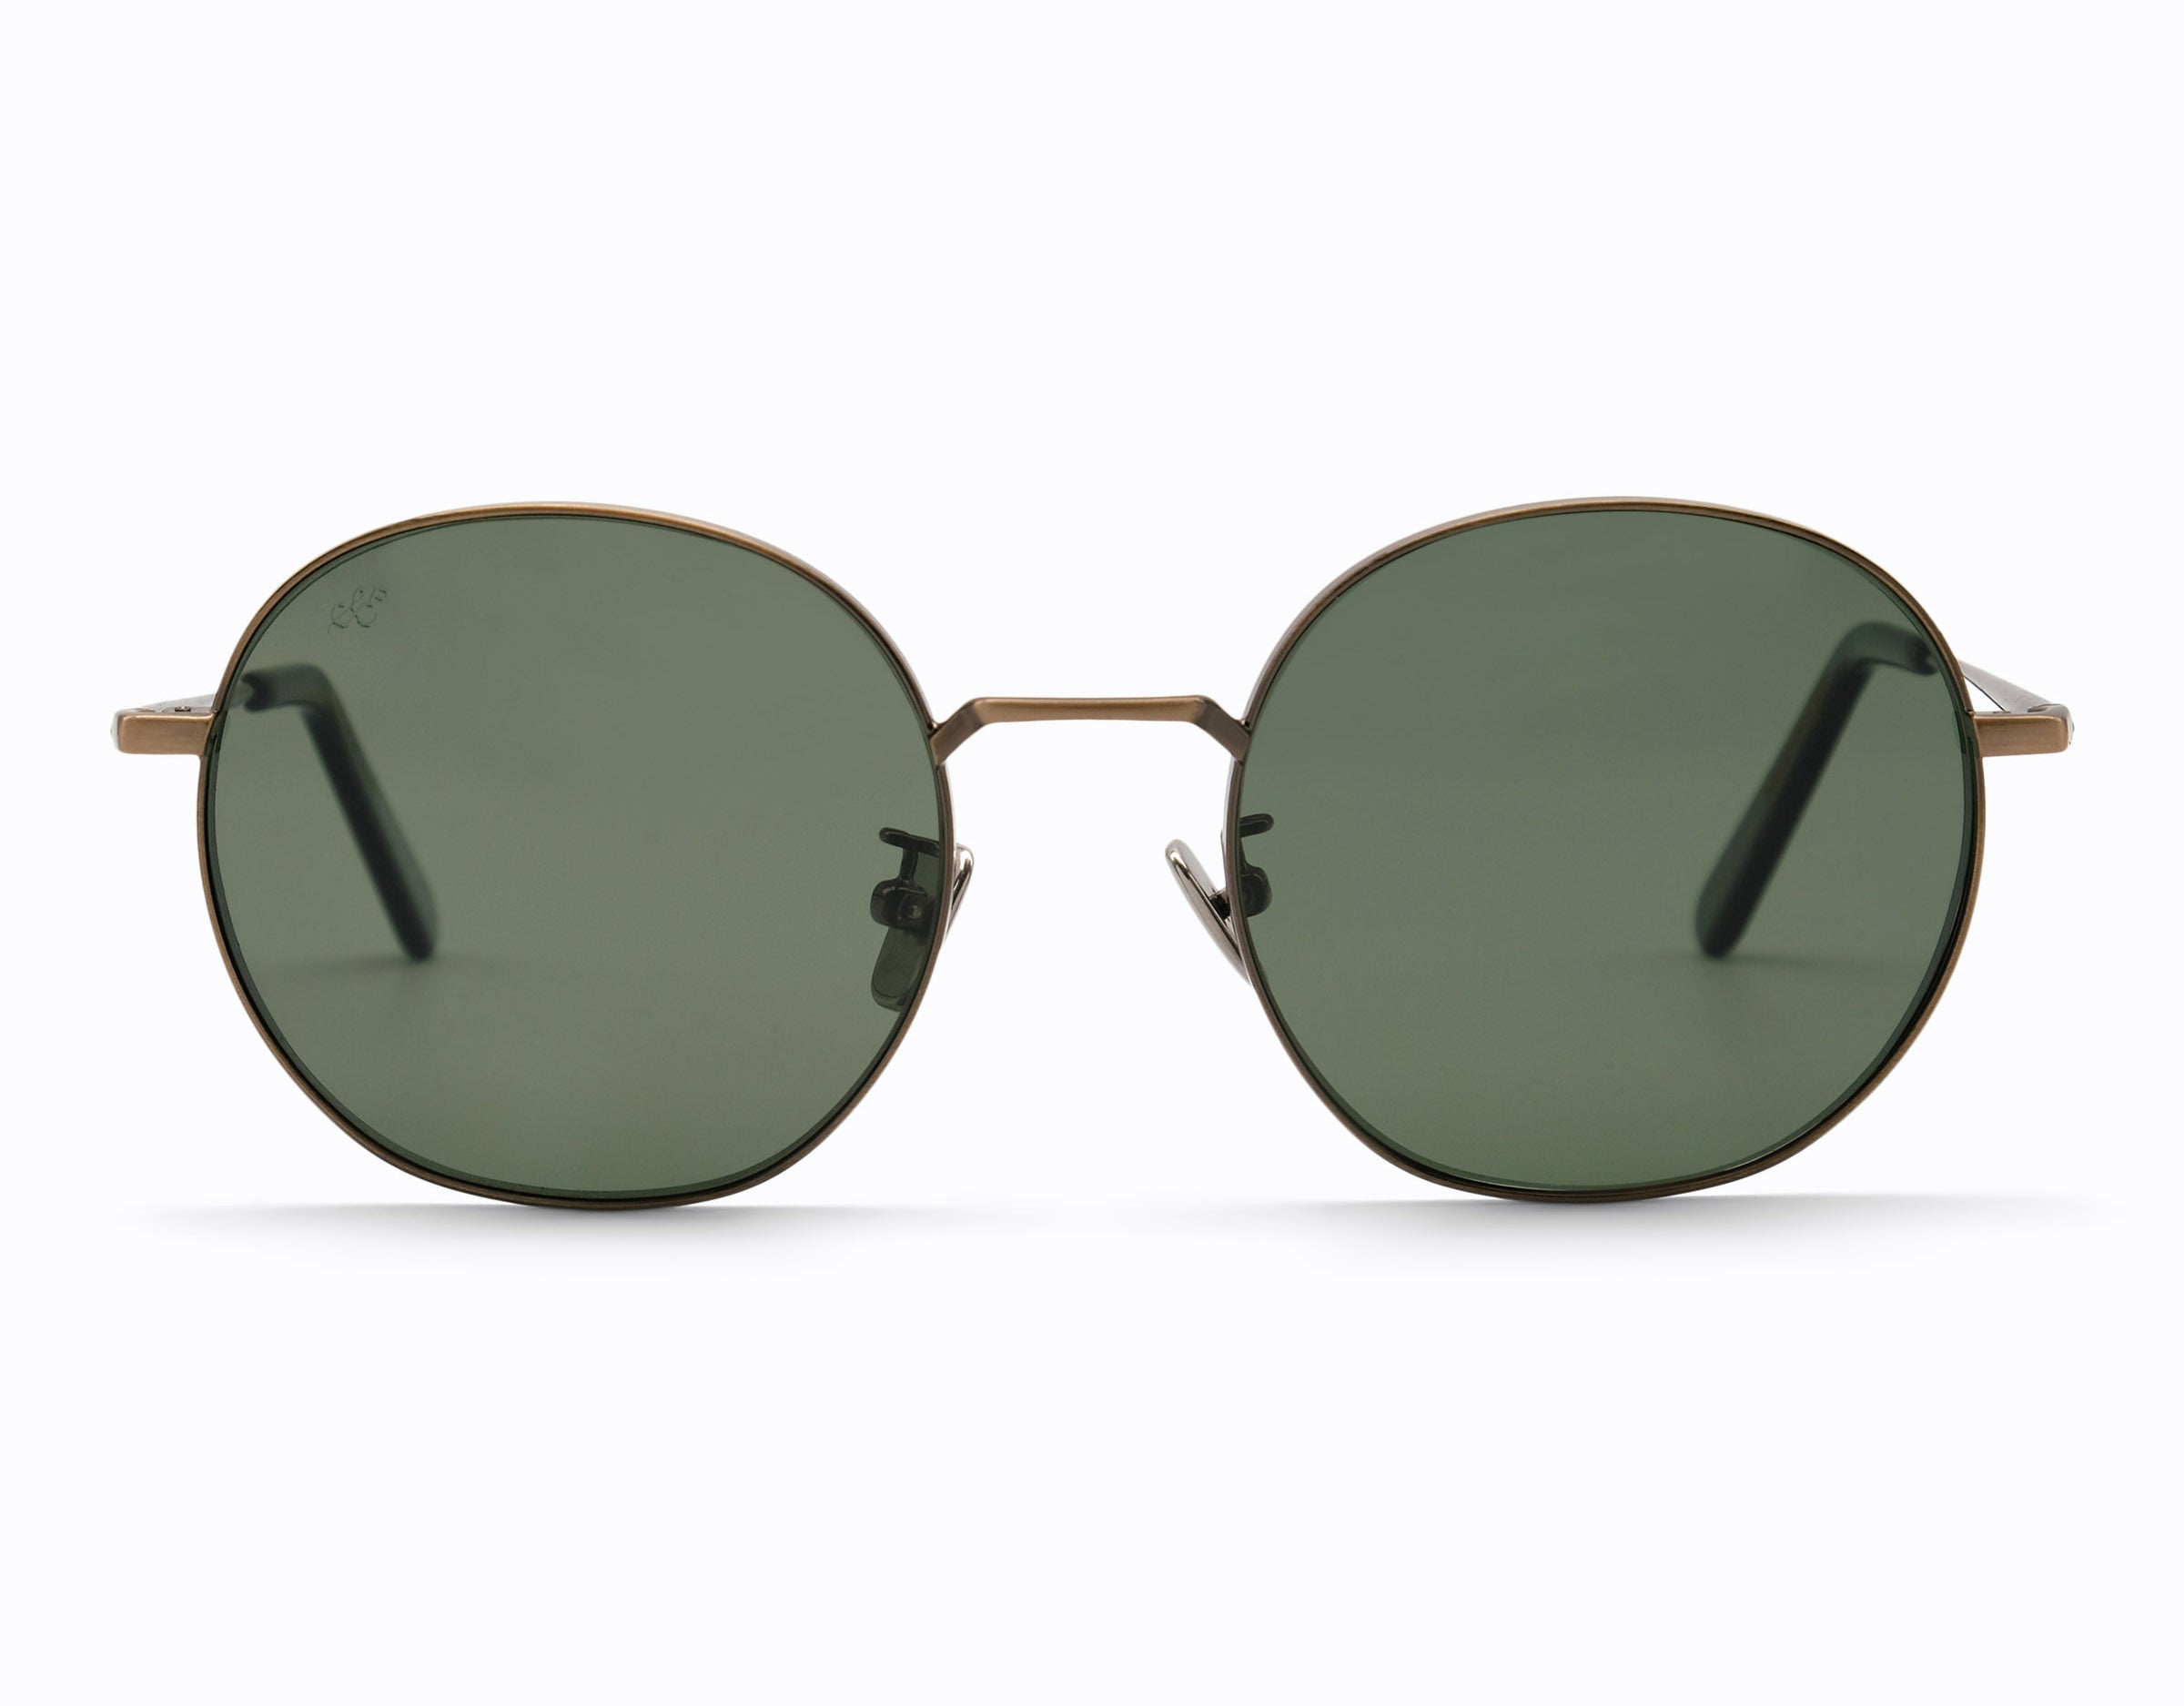 Miami Polarised Sunglasses SummerEyez Copper - Olive Green 